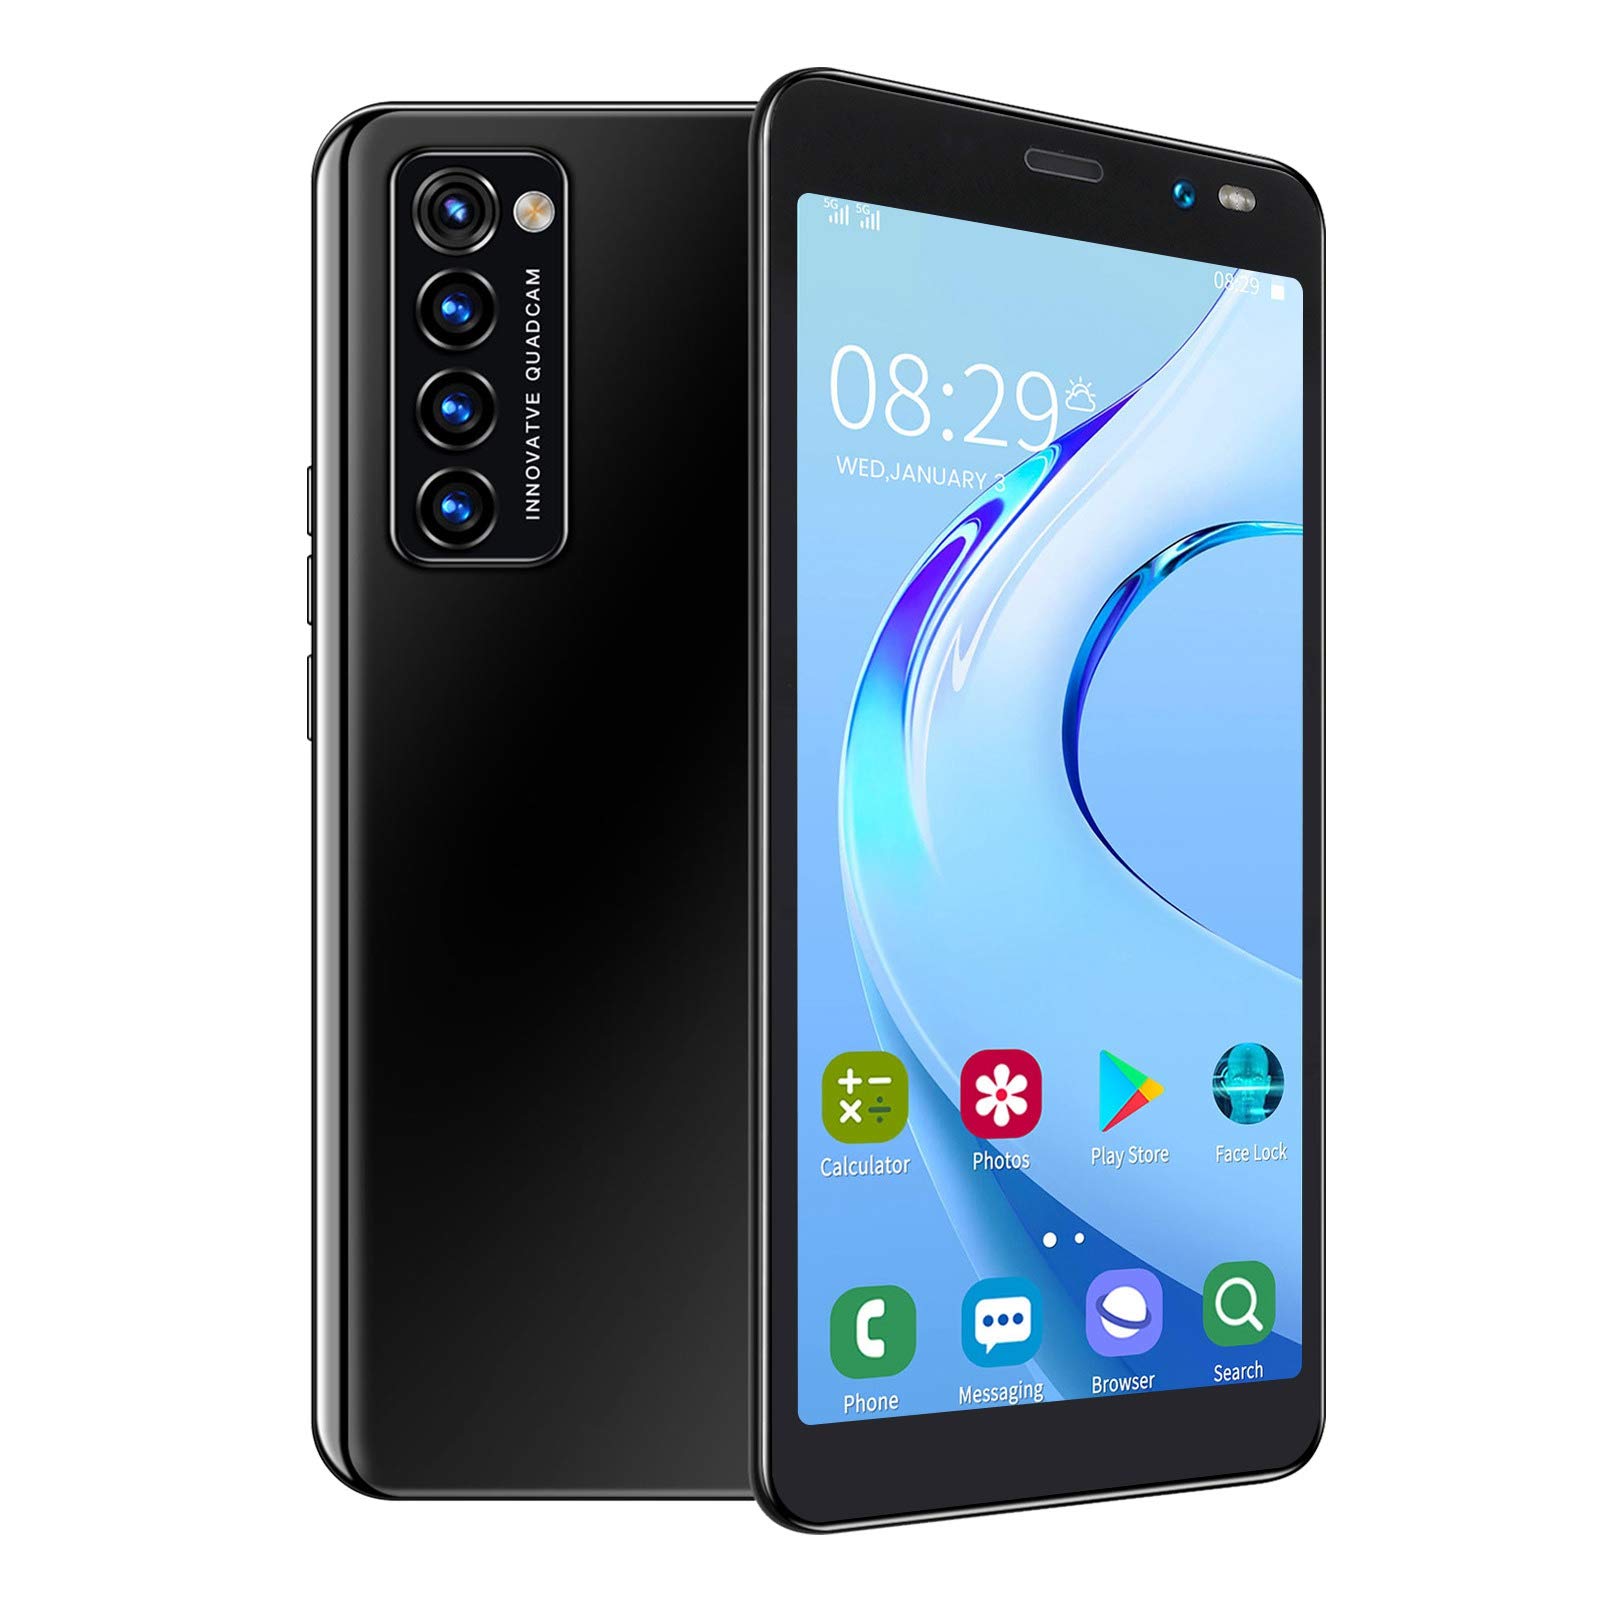 Cheap Rino4 Pro Android Smartphone Main Unit Mobile Phone 6.1 Inch Large Screen 1GB RAM + 8GB ROM 128GB Expansion Dual SIM 2 Megapixels + 5 Megapixel Camera 2200mAh Battery (Black)